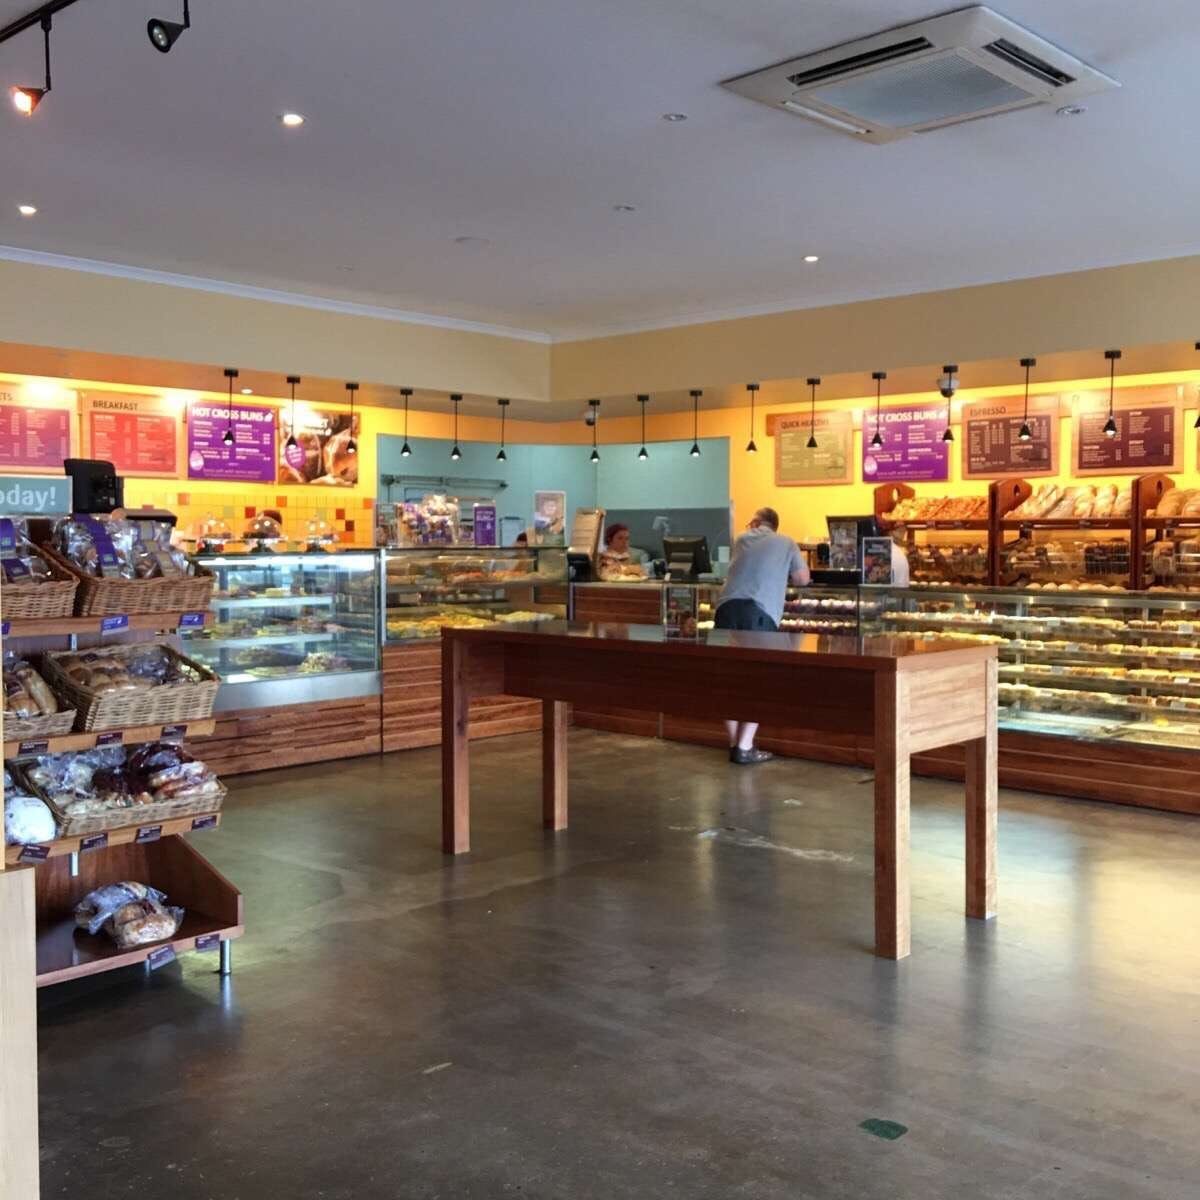 Banjo's Bakery Cafe - Launceston - New South Wales Tourism 